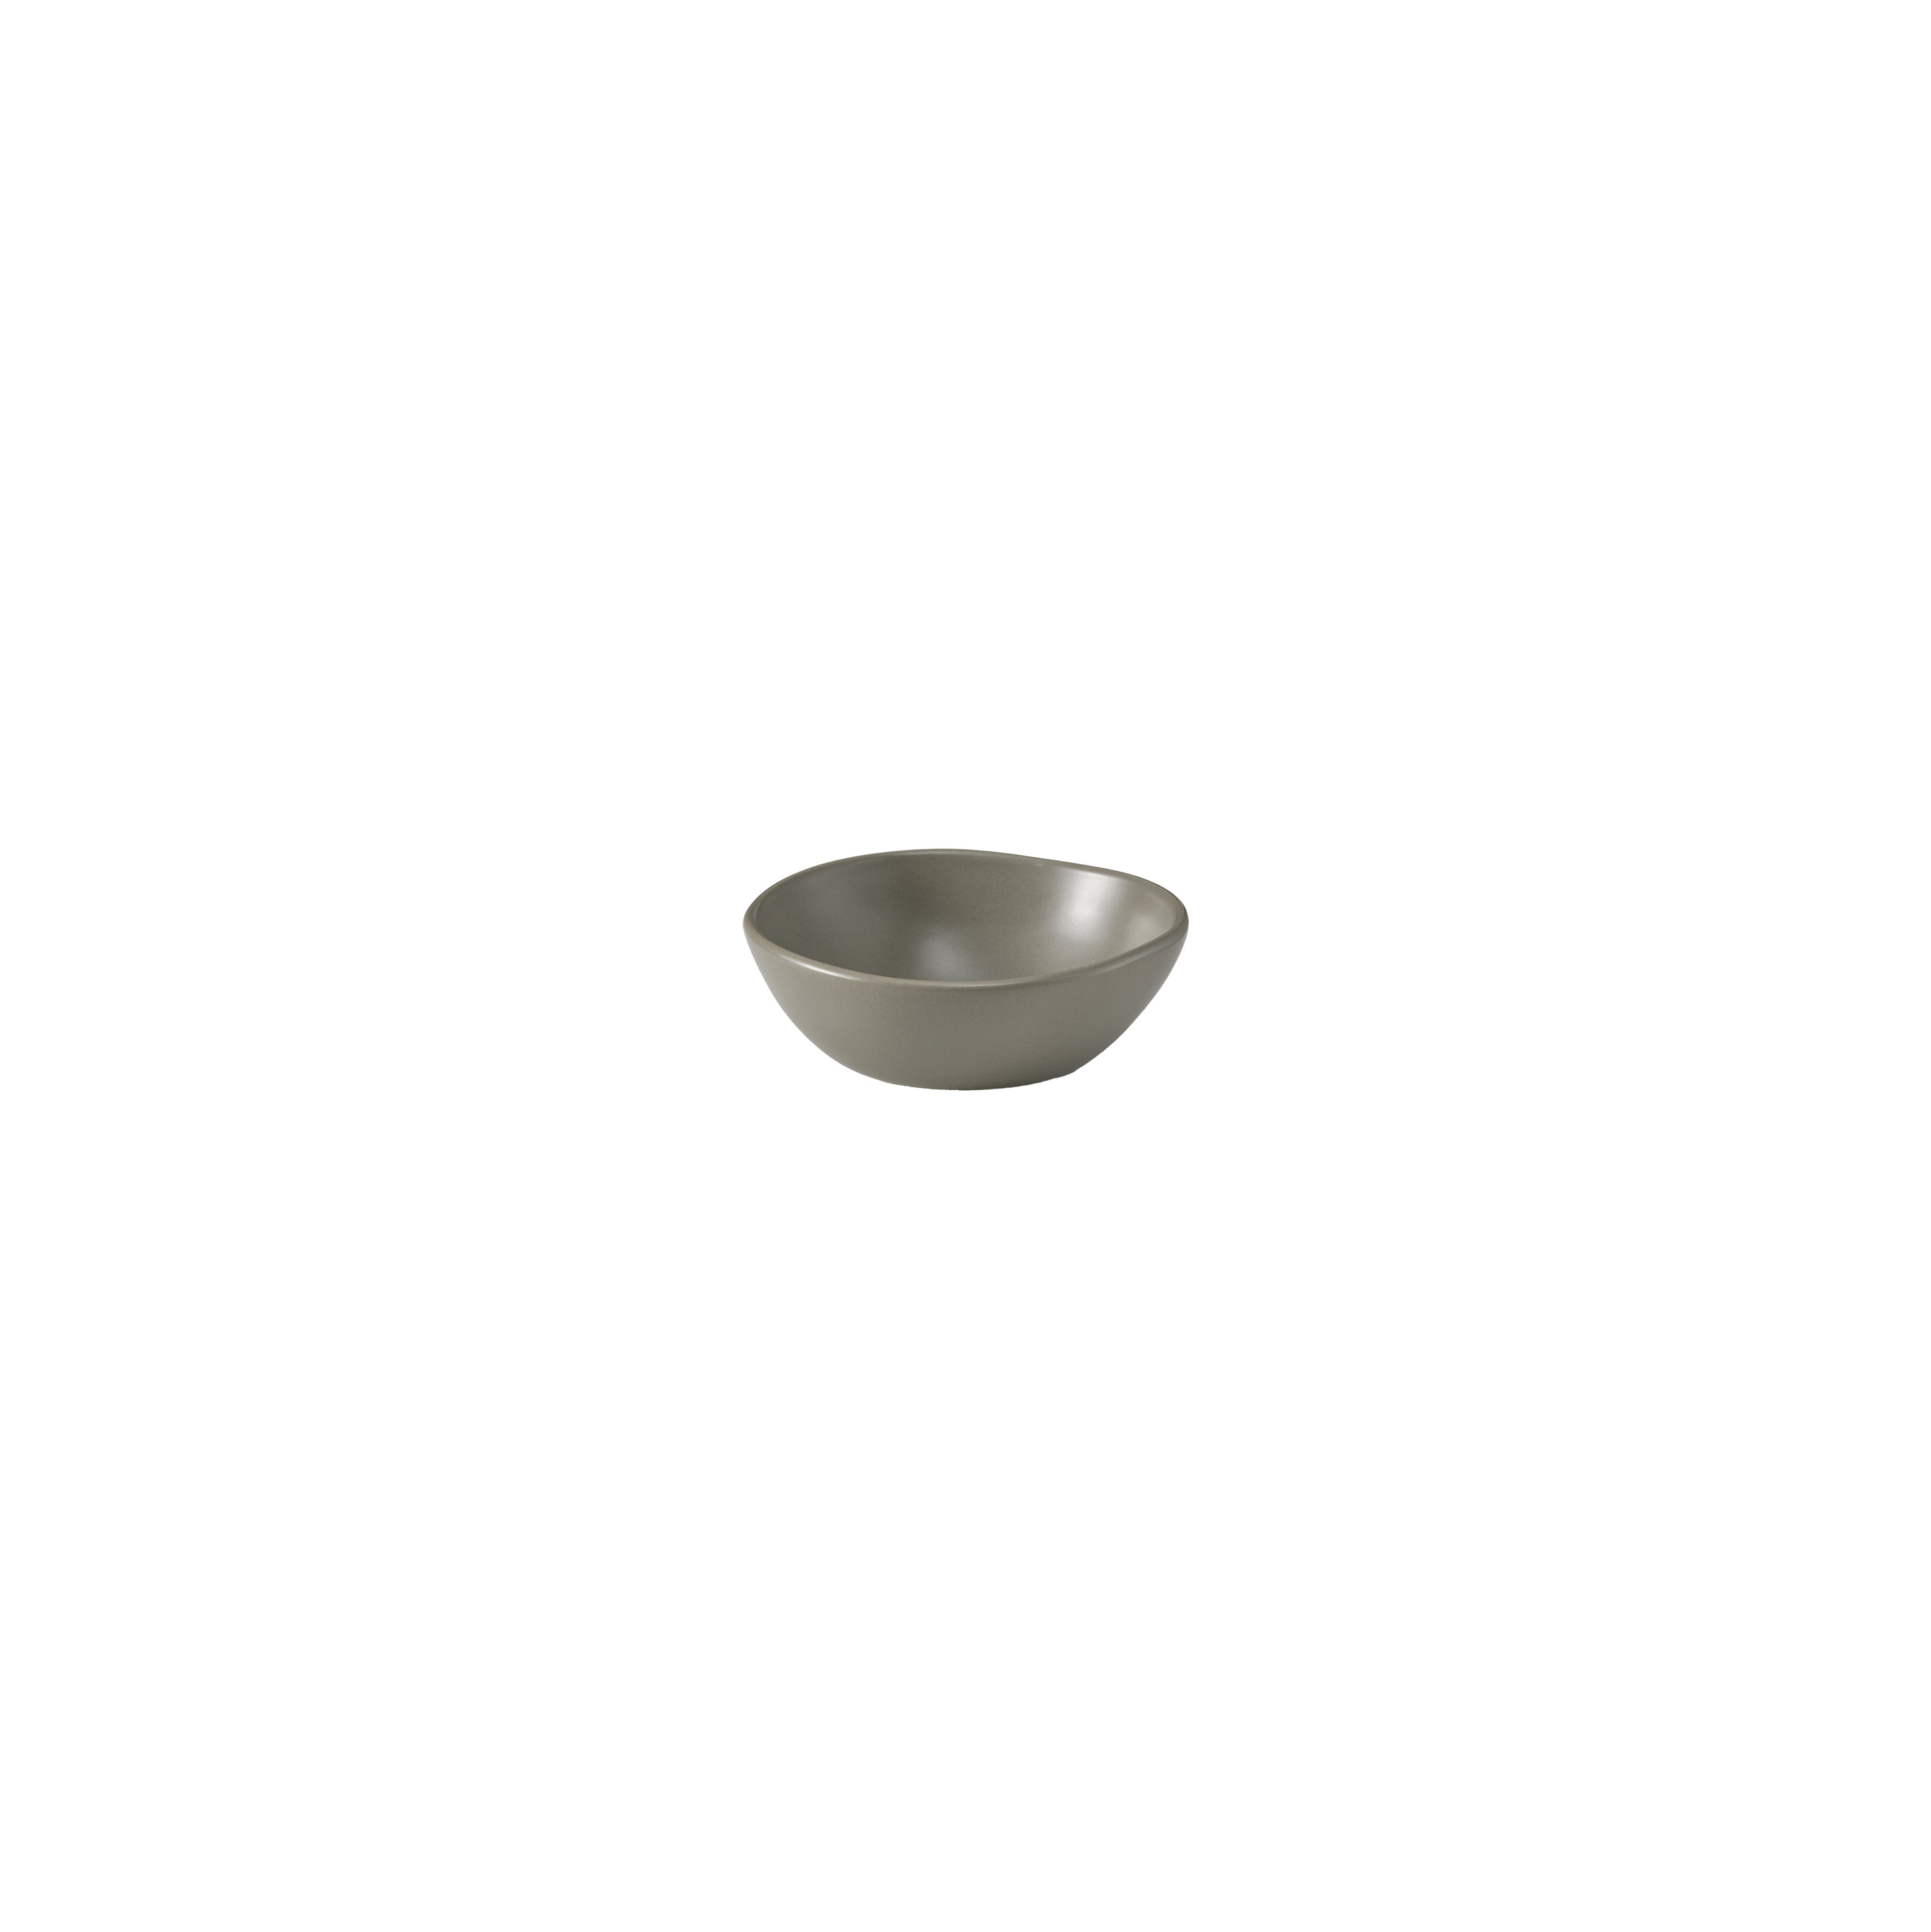 Tonkin Bowl XS: Light grey